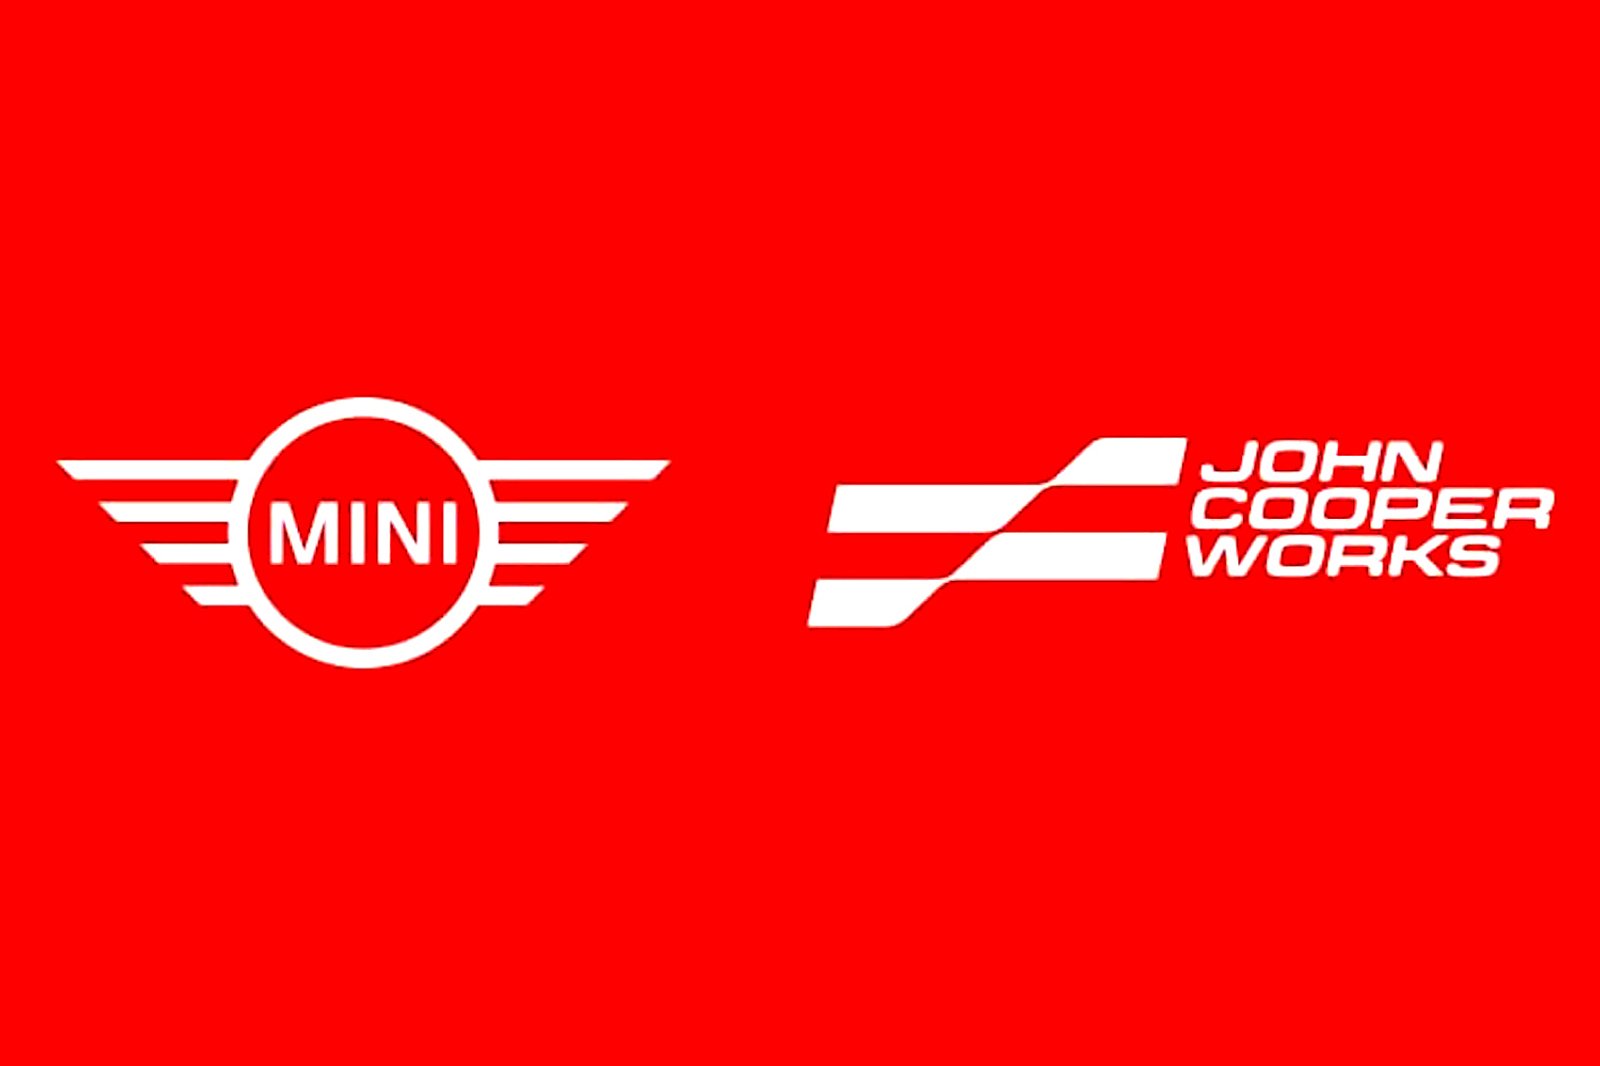 Mini Cooper logo, Vector Logo of Mini Cooper brand free download (eps, ai,  png, cdr) formats